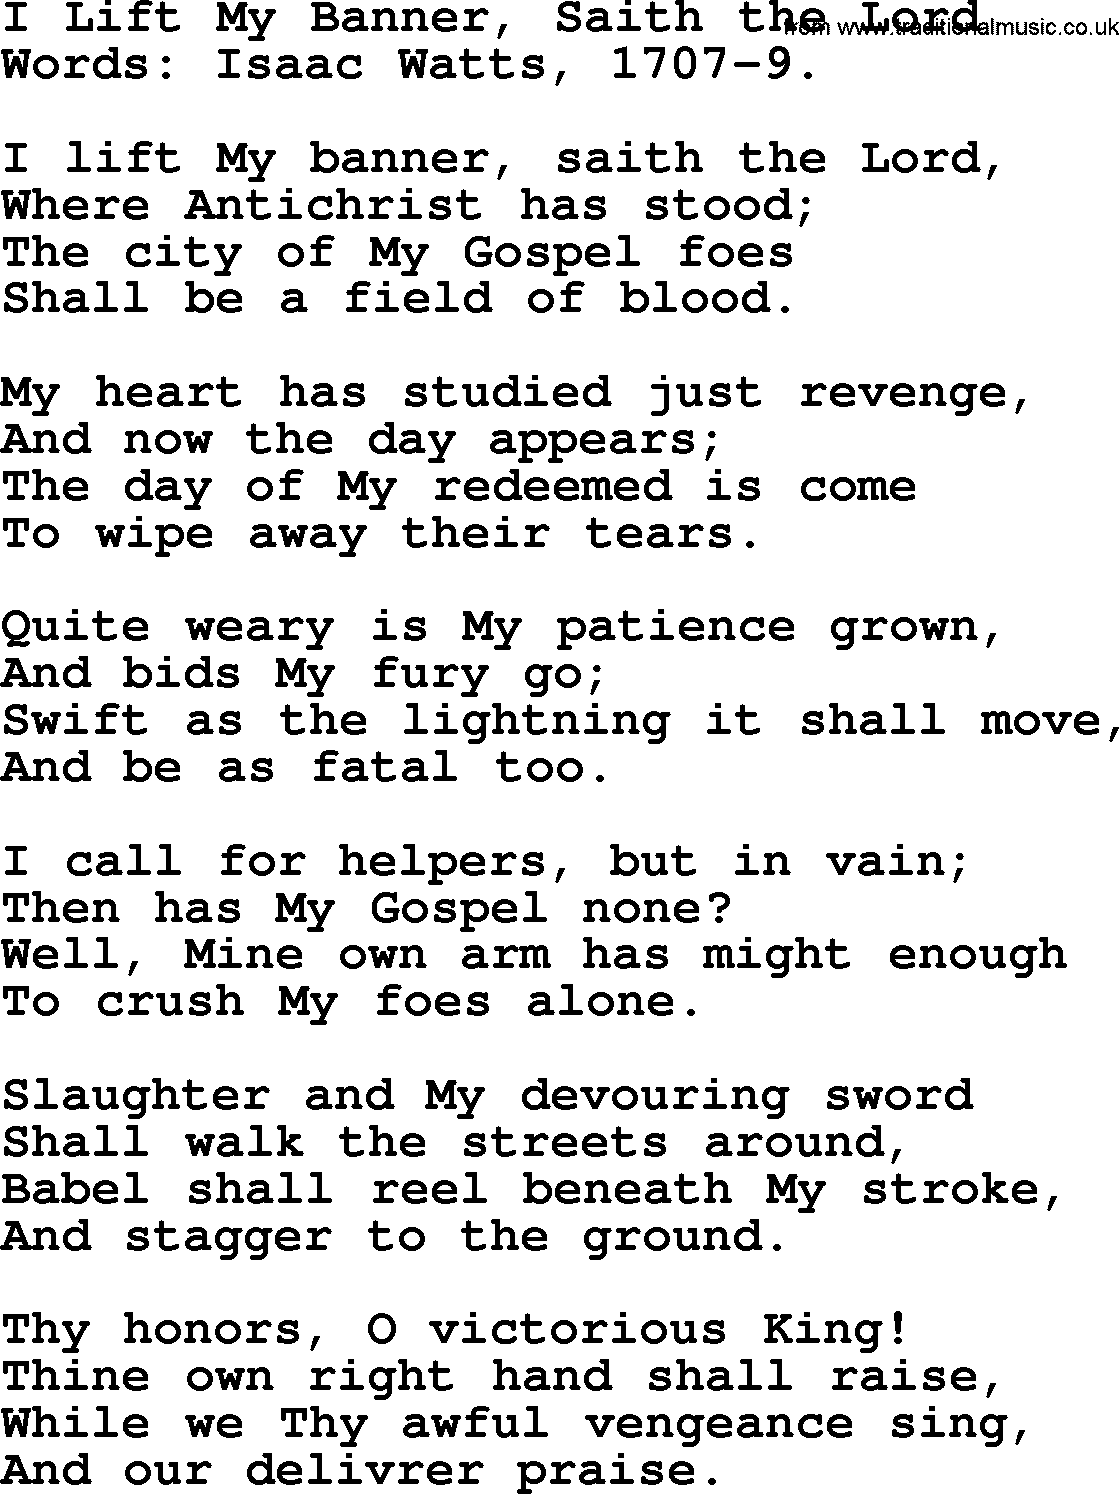 Isaac Watts Christian hymn: I Lift My Banner, Saith the Lord- lyricss